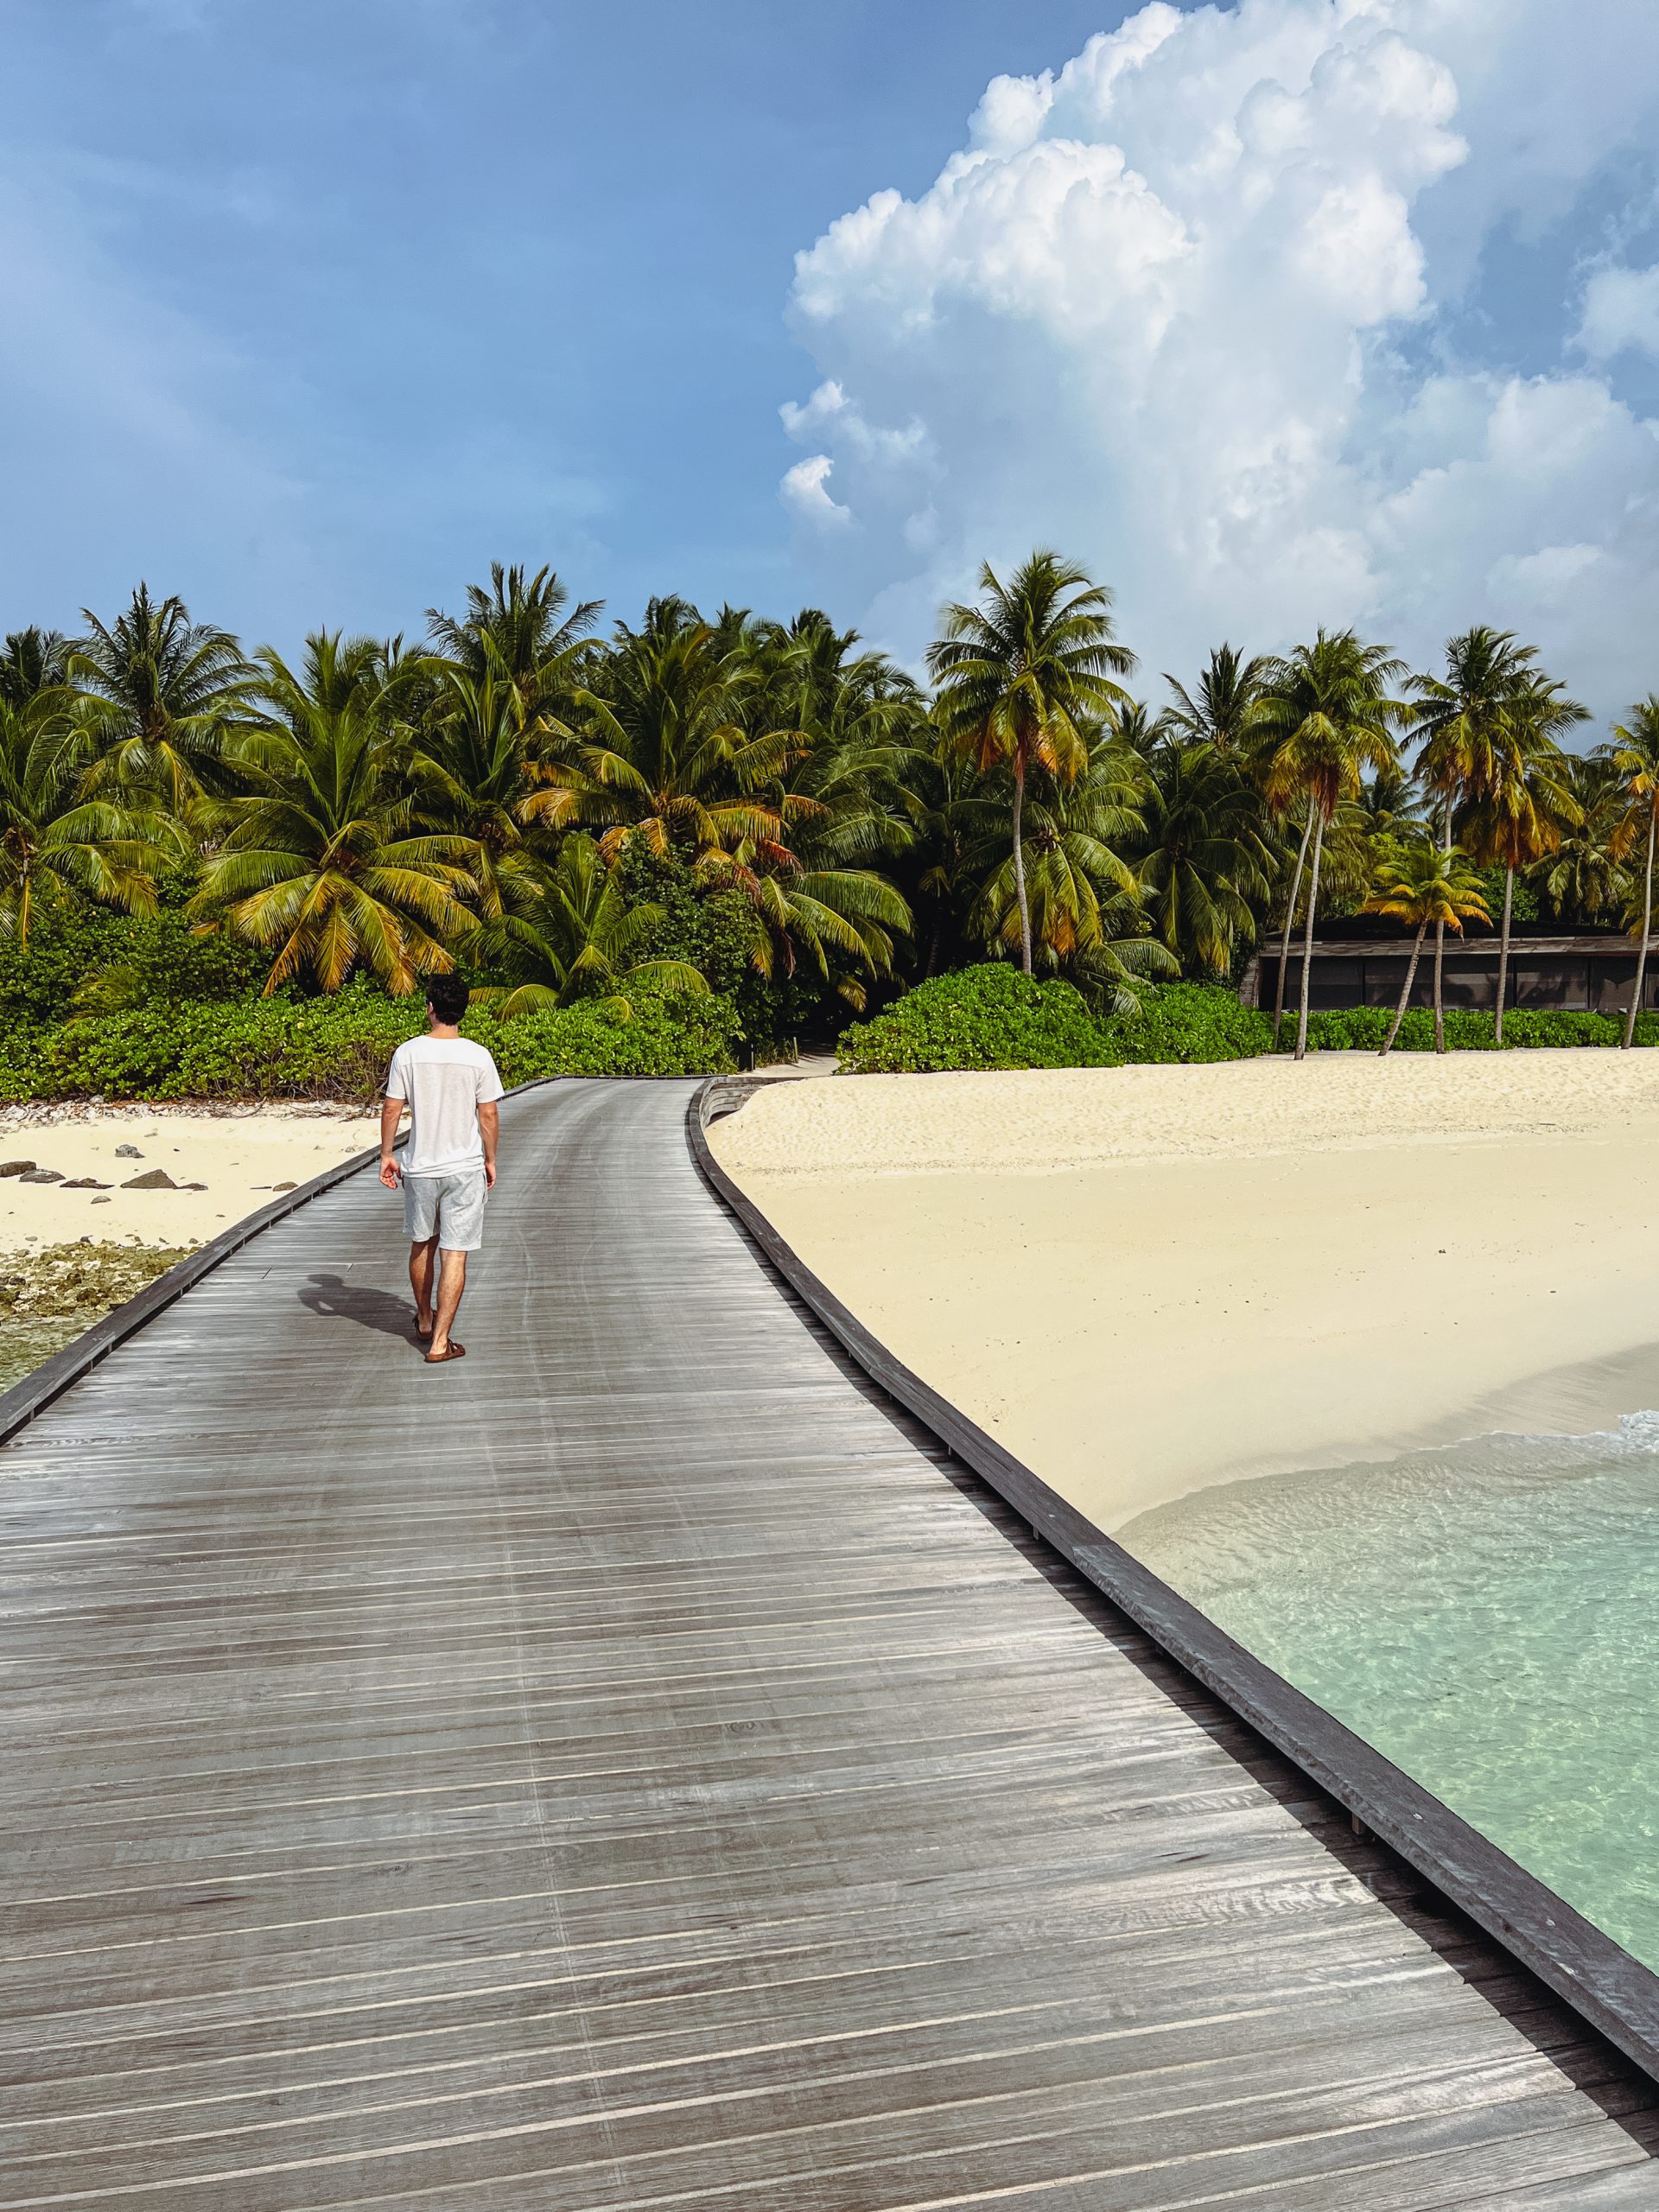 a man walking on a boardwalk on a beach